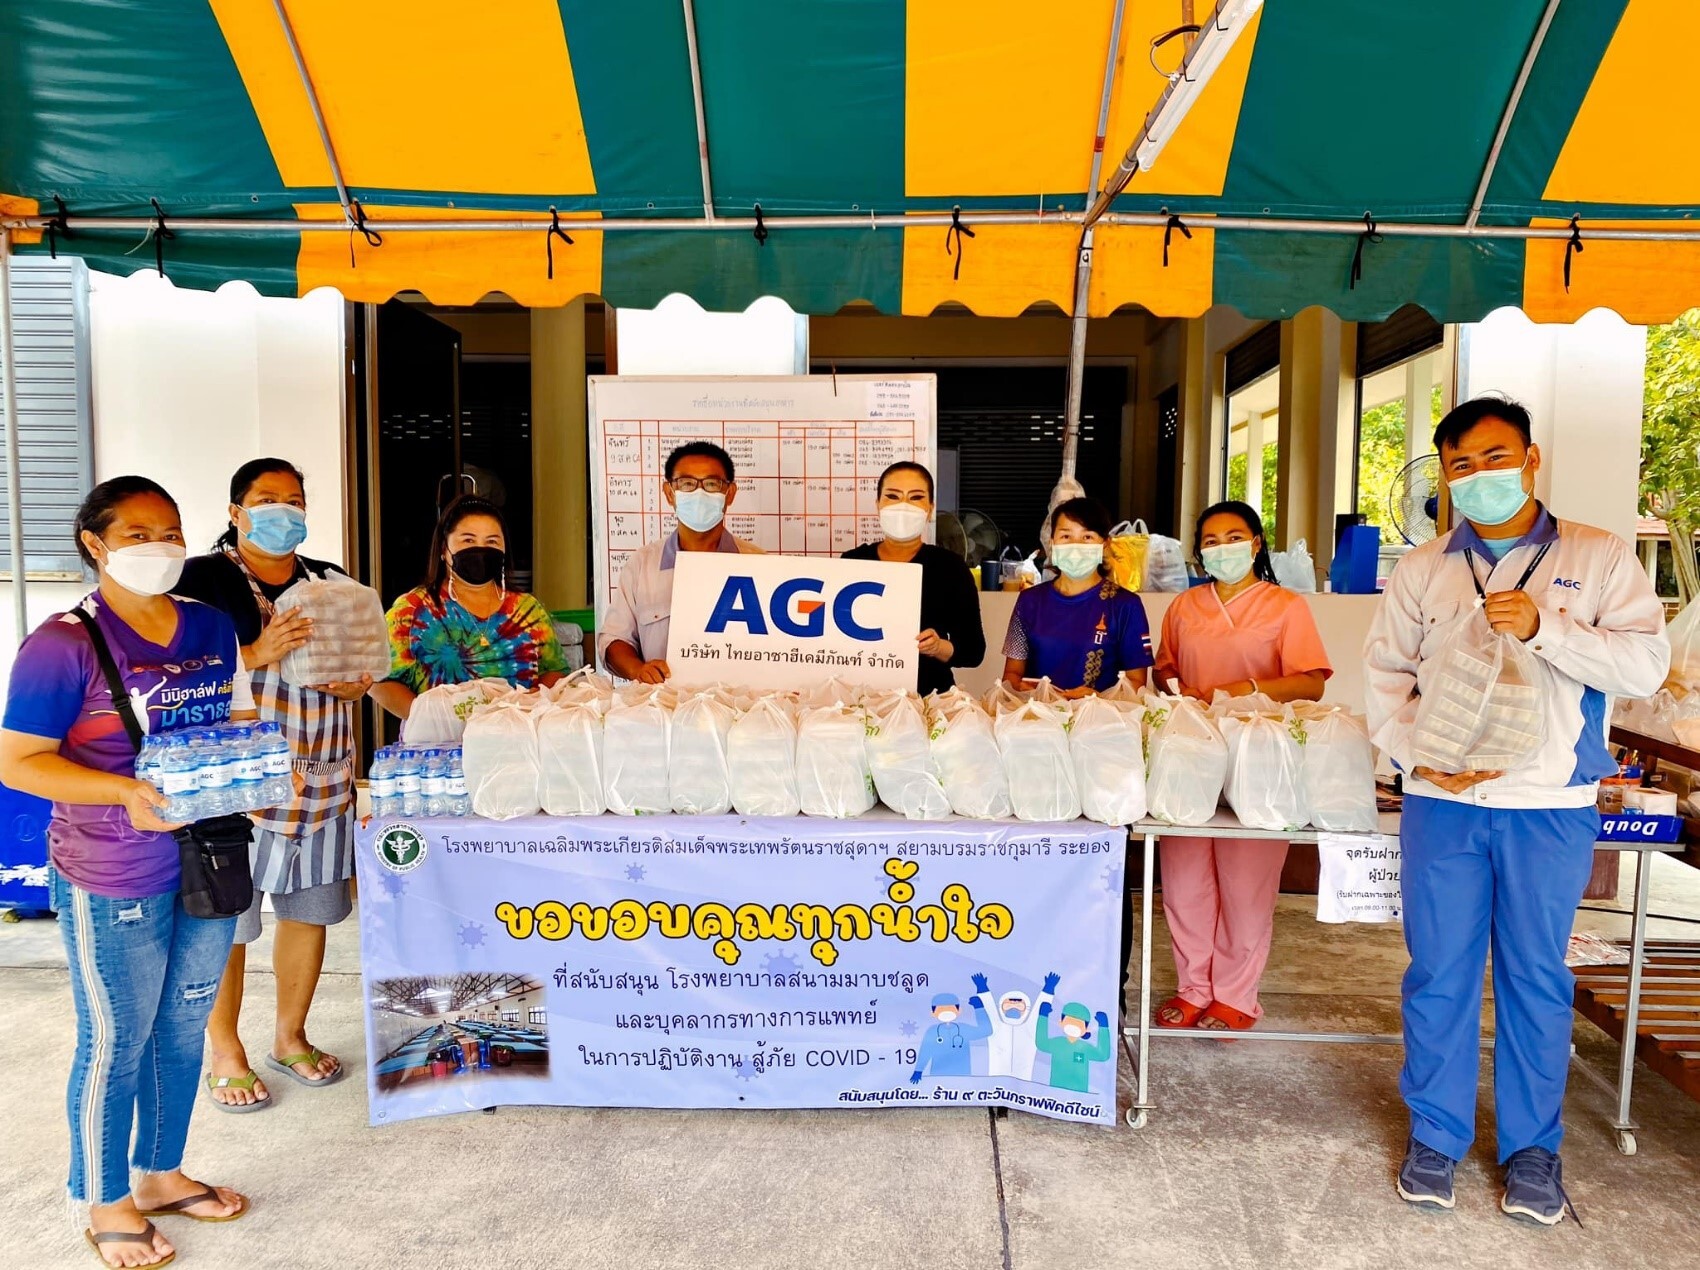 AGC มอบอาหารกลางวันและน้ำดื่มสำหรับผู้ป่วยและบุคลากรทางการแพทย์โรงพยาบาลสนามวัดมาบชลูด